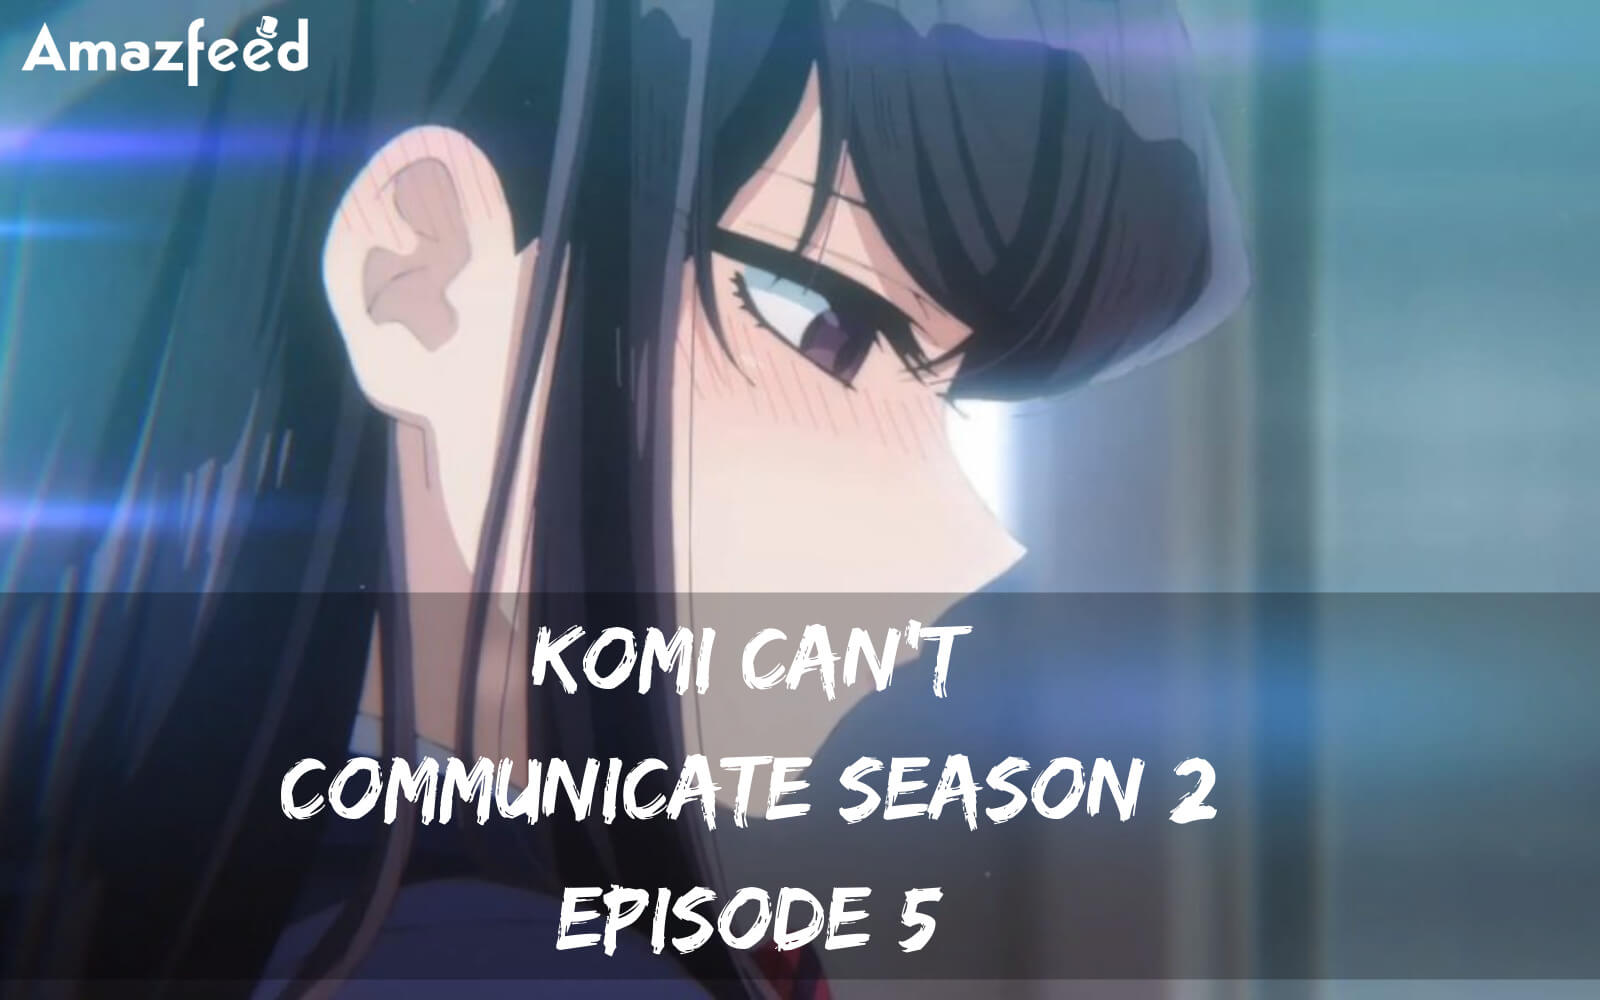 Komi Can’t Communicate Season 2 Episode 5 release date